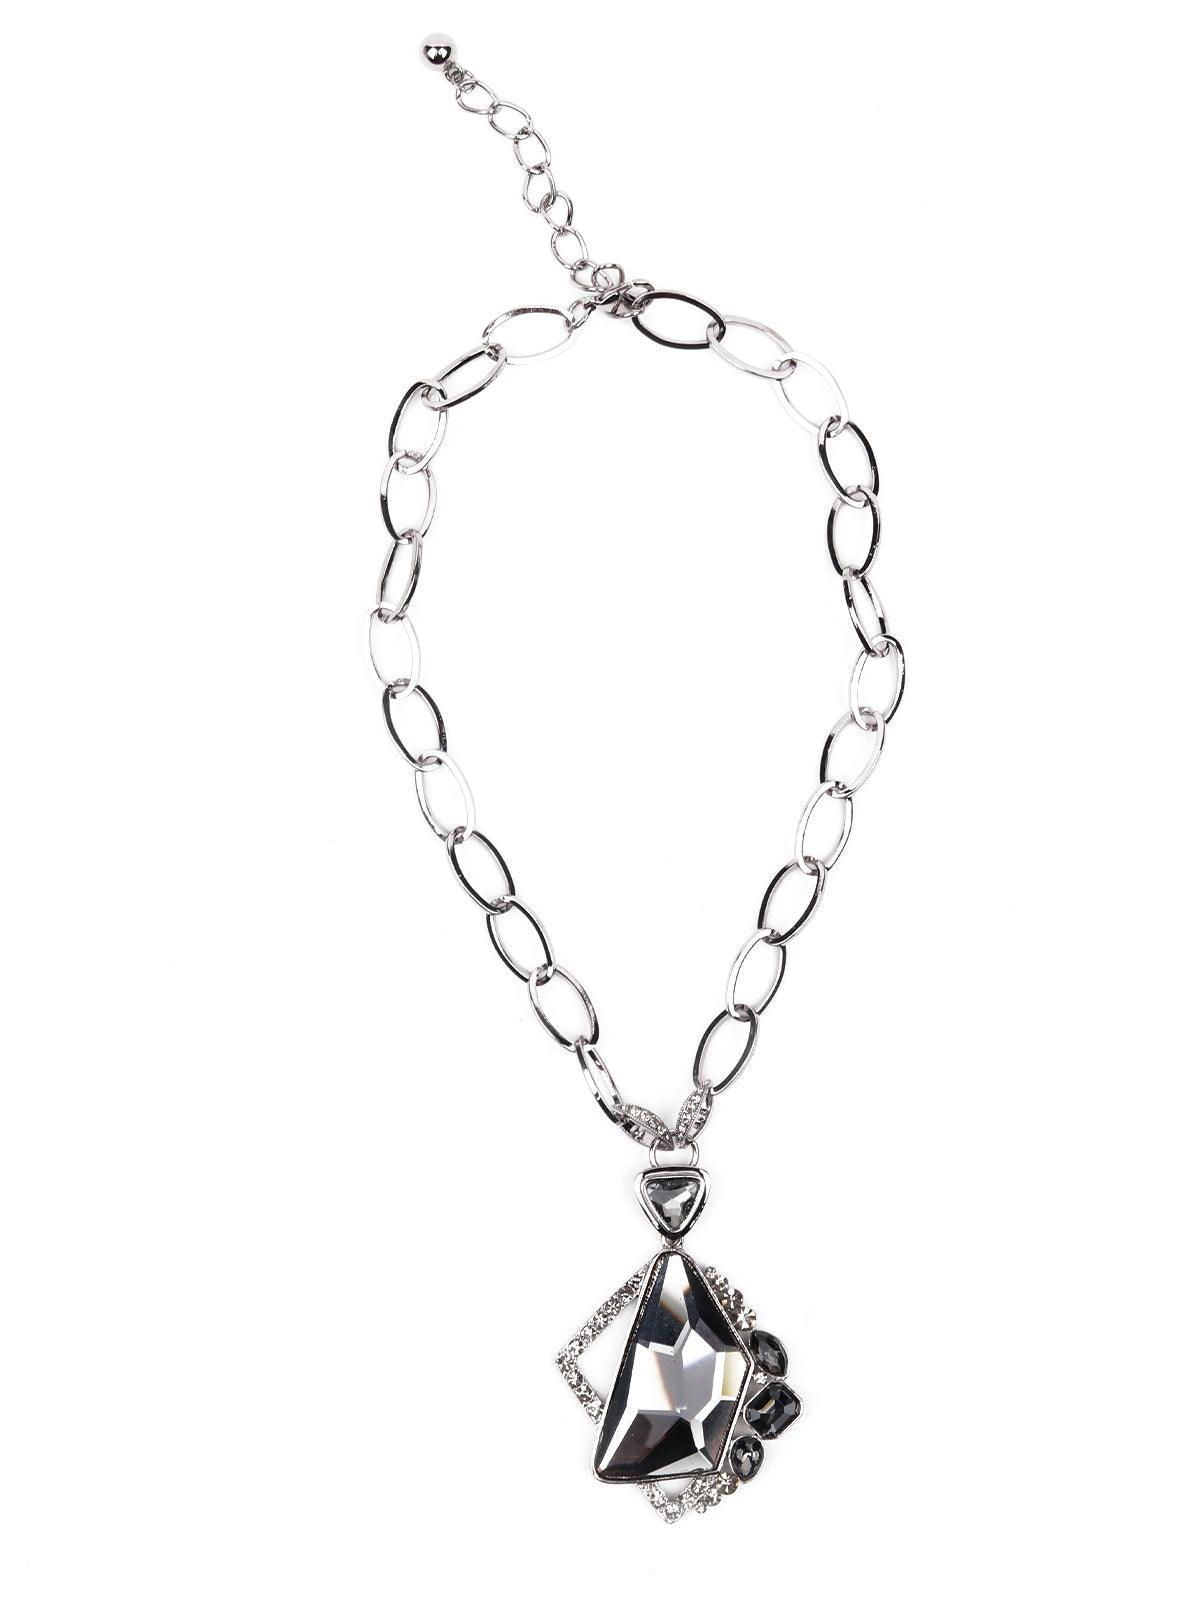 Stunning silver locket necklace - Odette